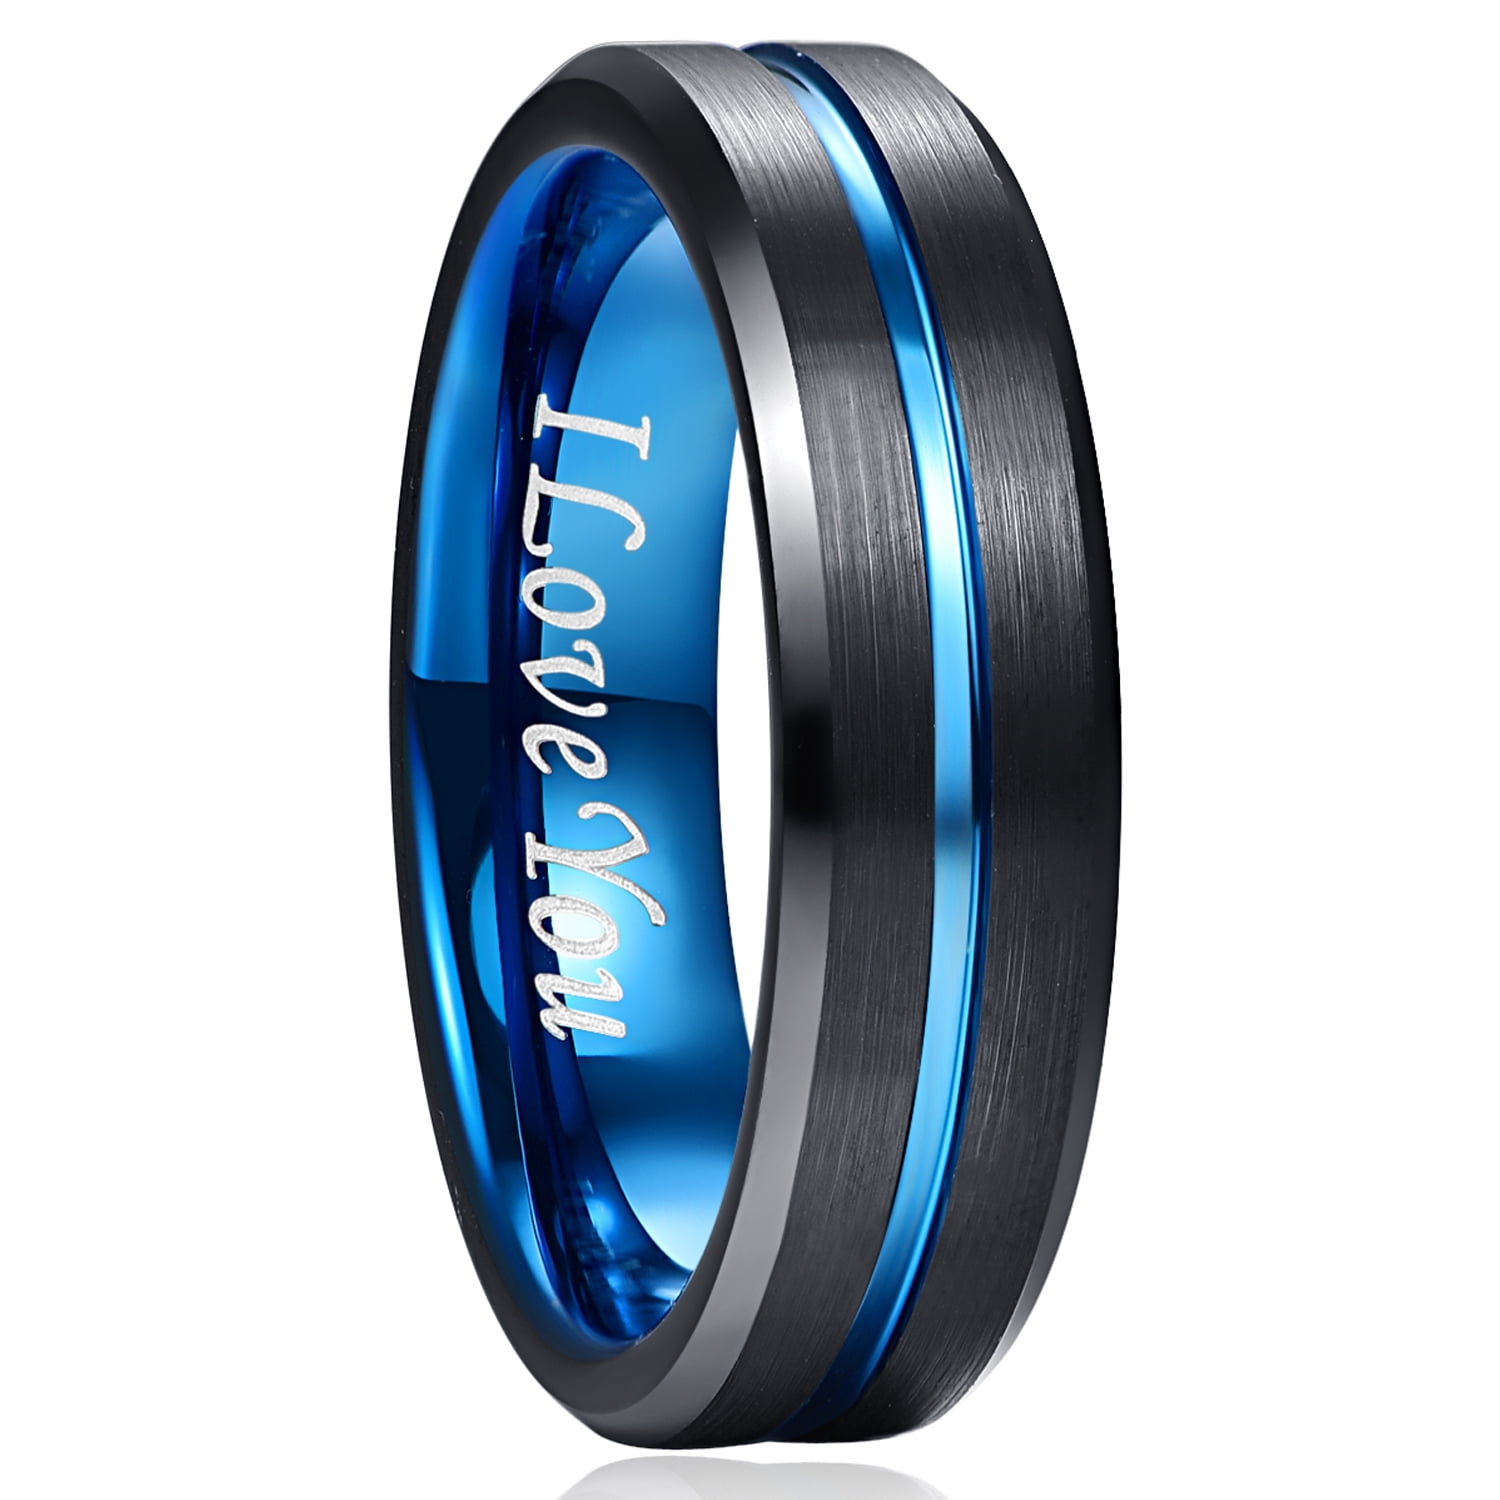 8mm Tungsten Ring Black Brushed Blue Stripe Wedding Band Men's Jewelry sz 8-15 